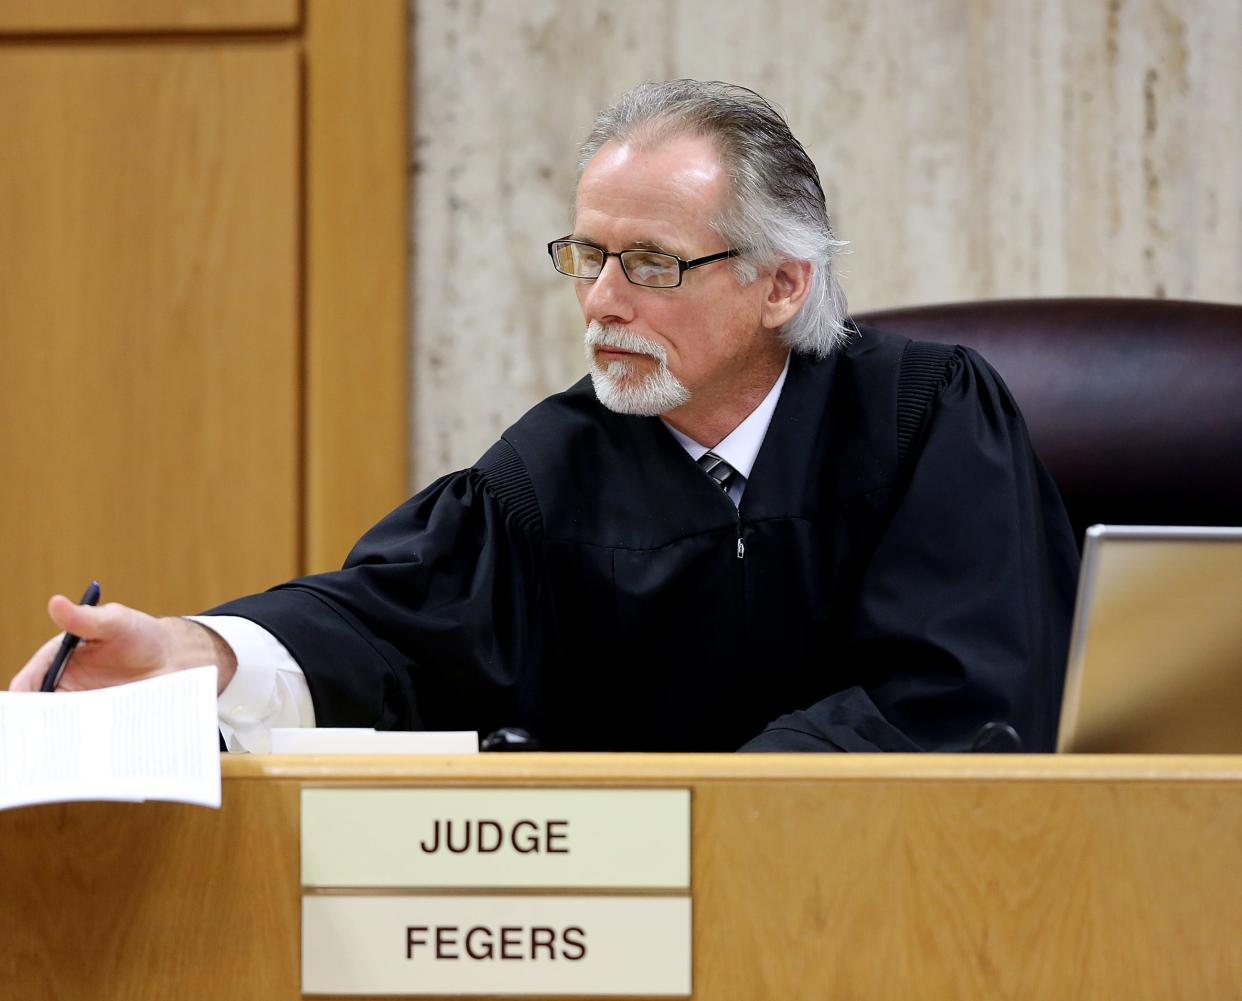 County Judge Robert Fegers will retire March 15.